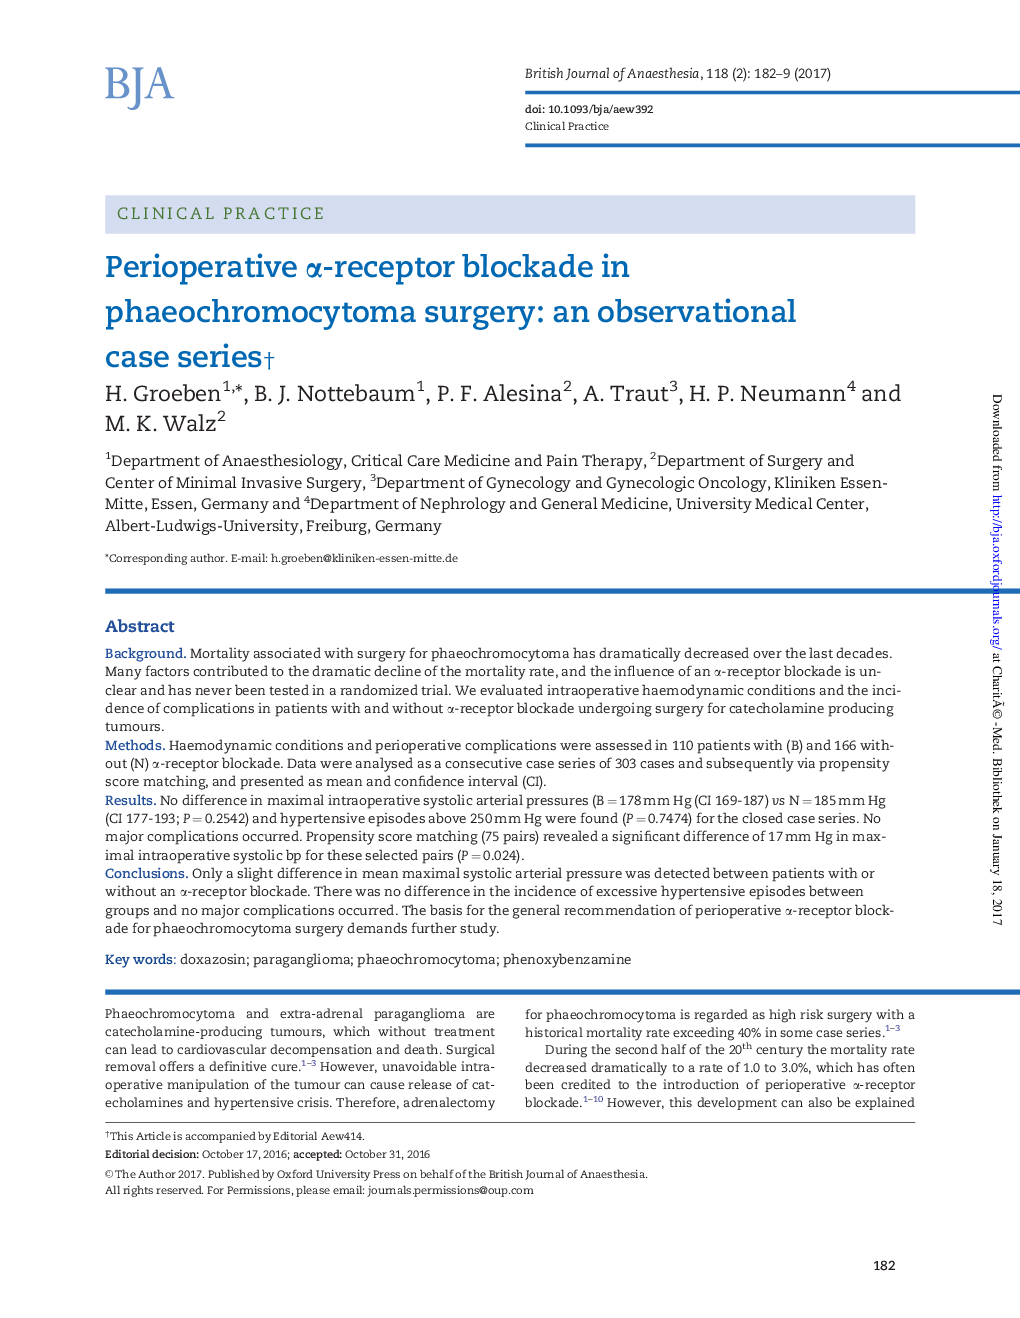 Perioperative Î±-receptor blockade in phaeochromocytoma surgery: an observational case seriesâ 